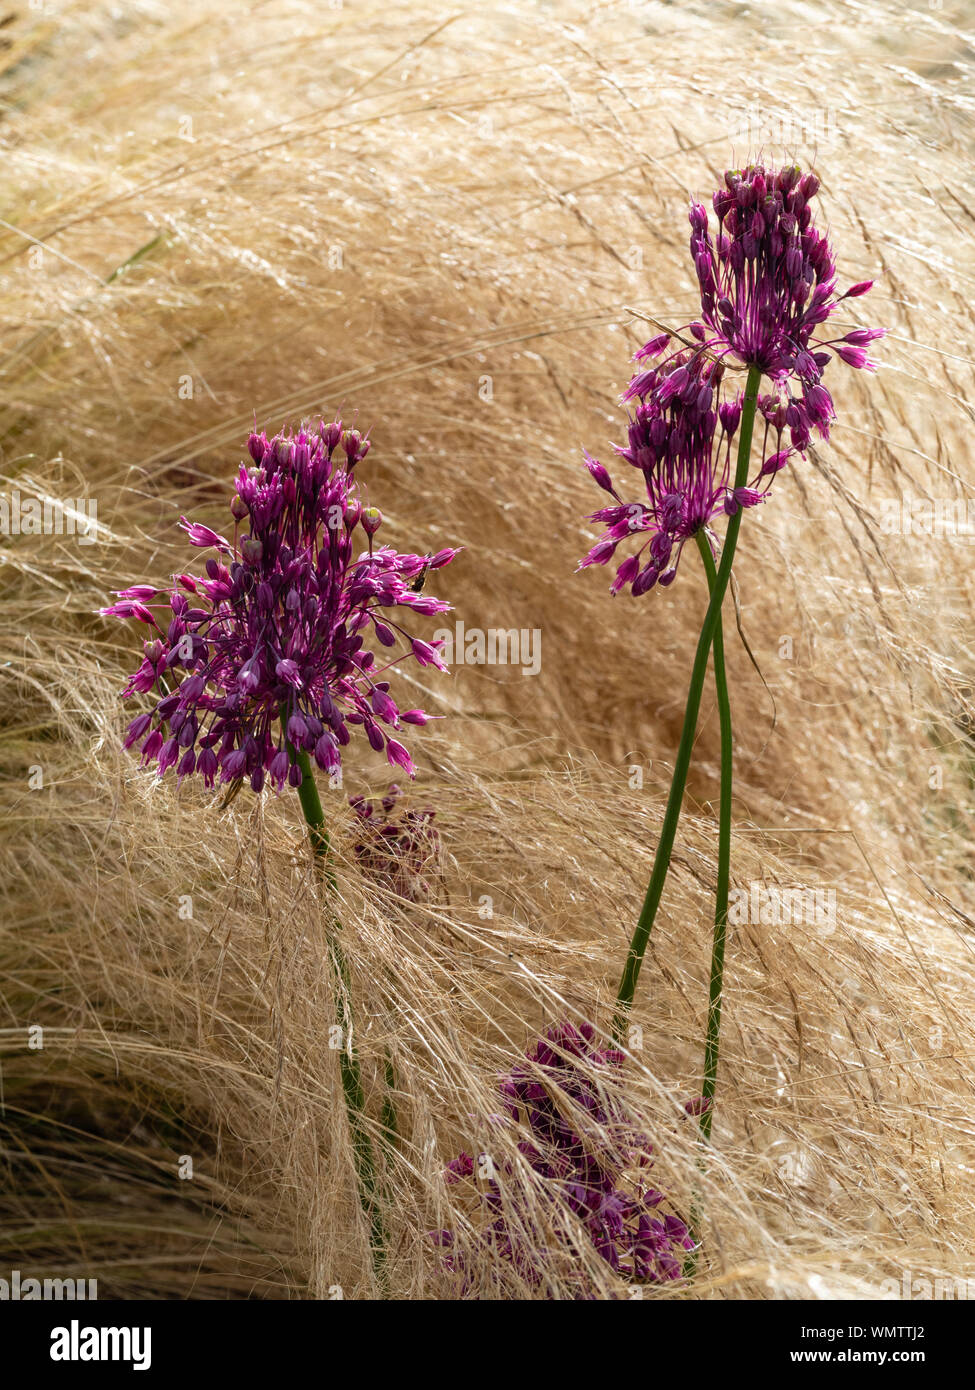 Le teste dei fiori della tarda estate a fioritura autunnale Allium carinatum ssp. pulchellum emerge attraverso la crescita feathery di Pennisetum villosum Foto Stock